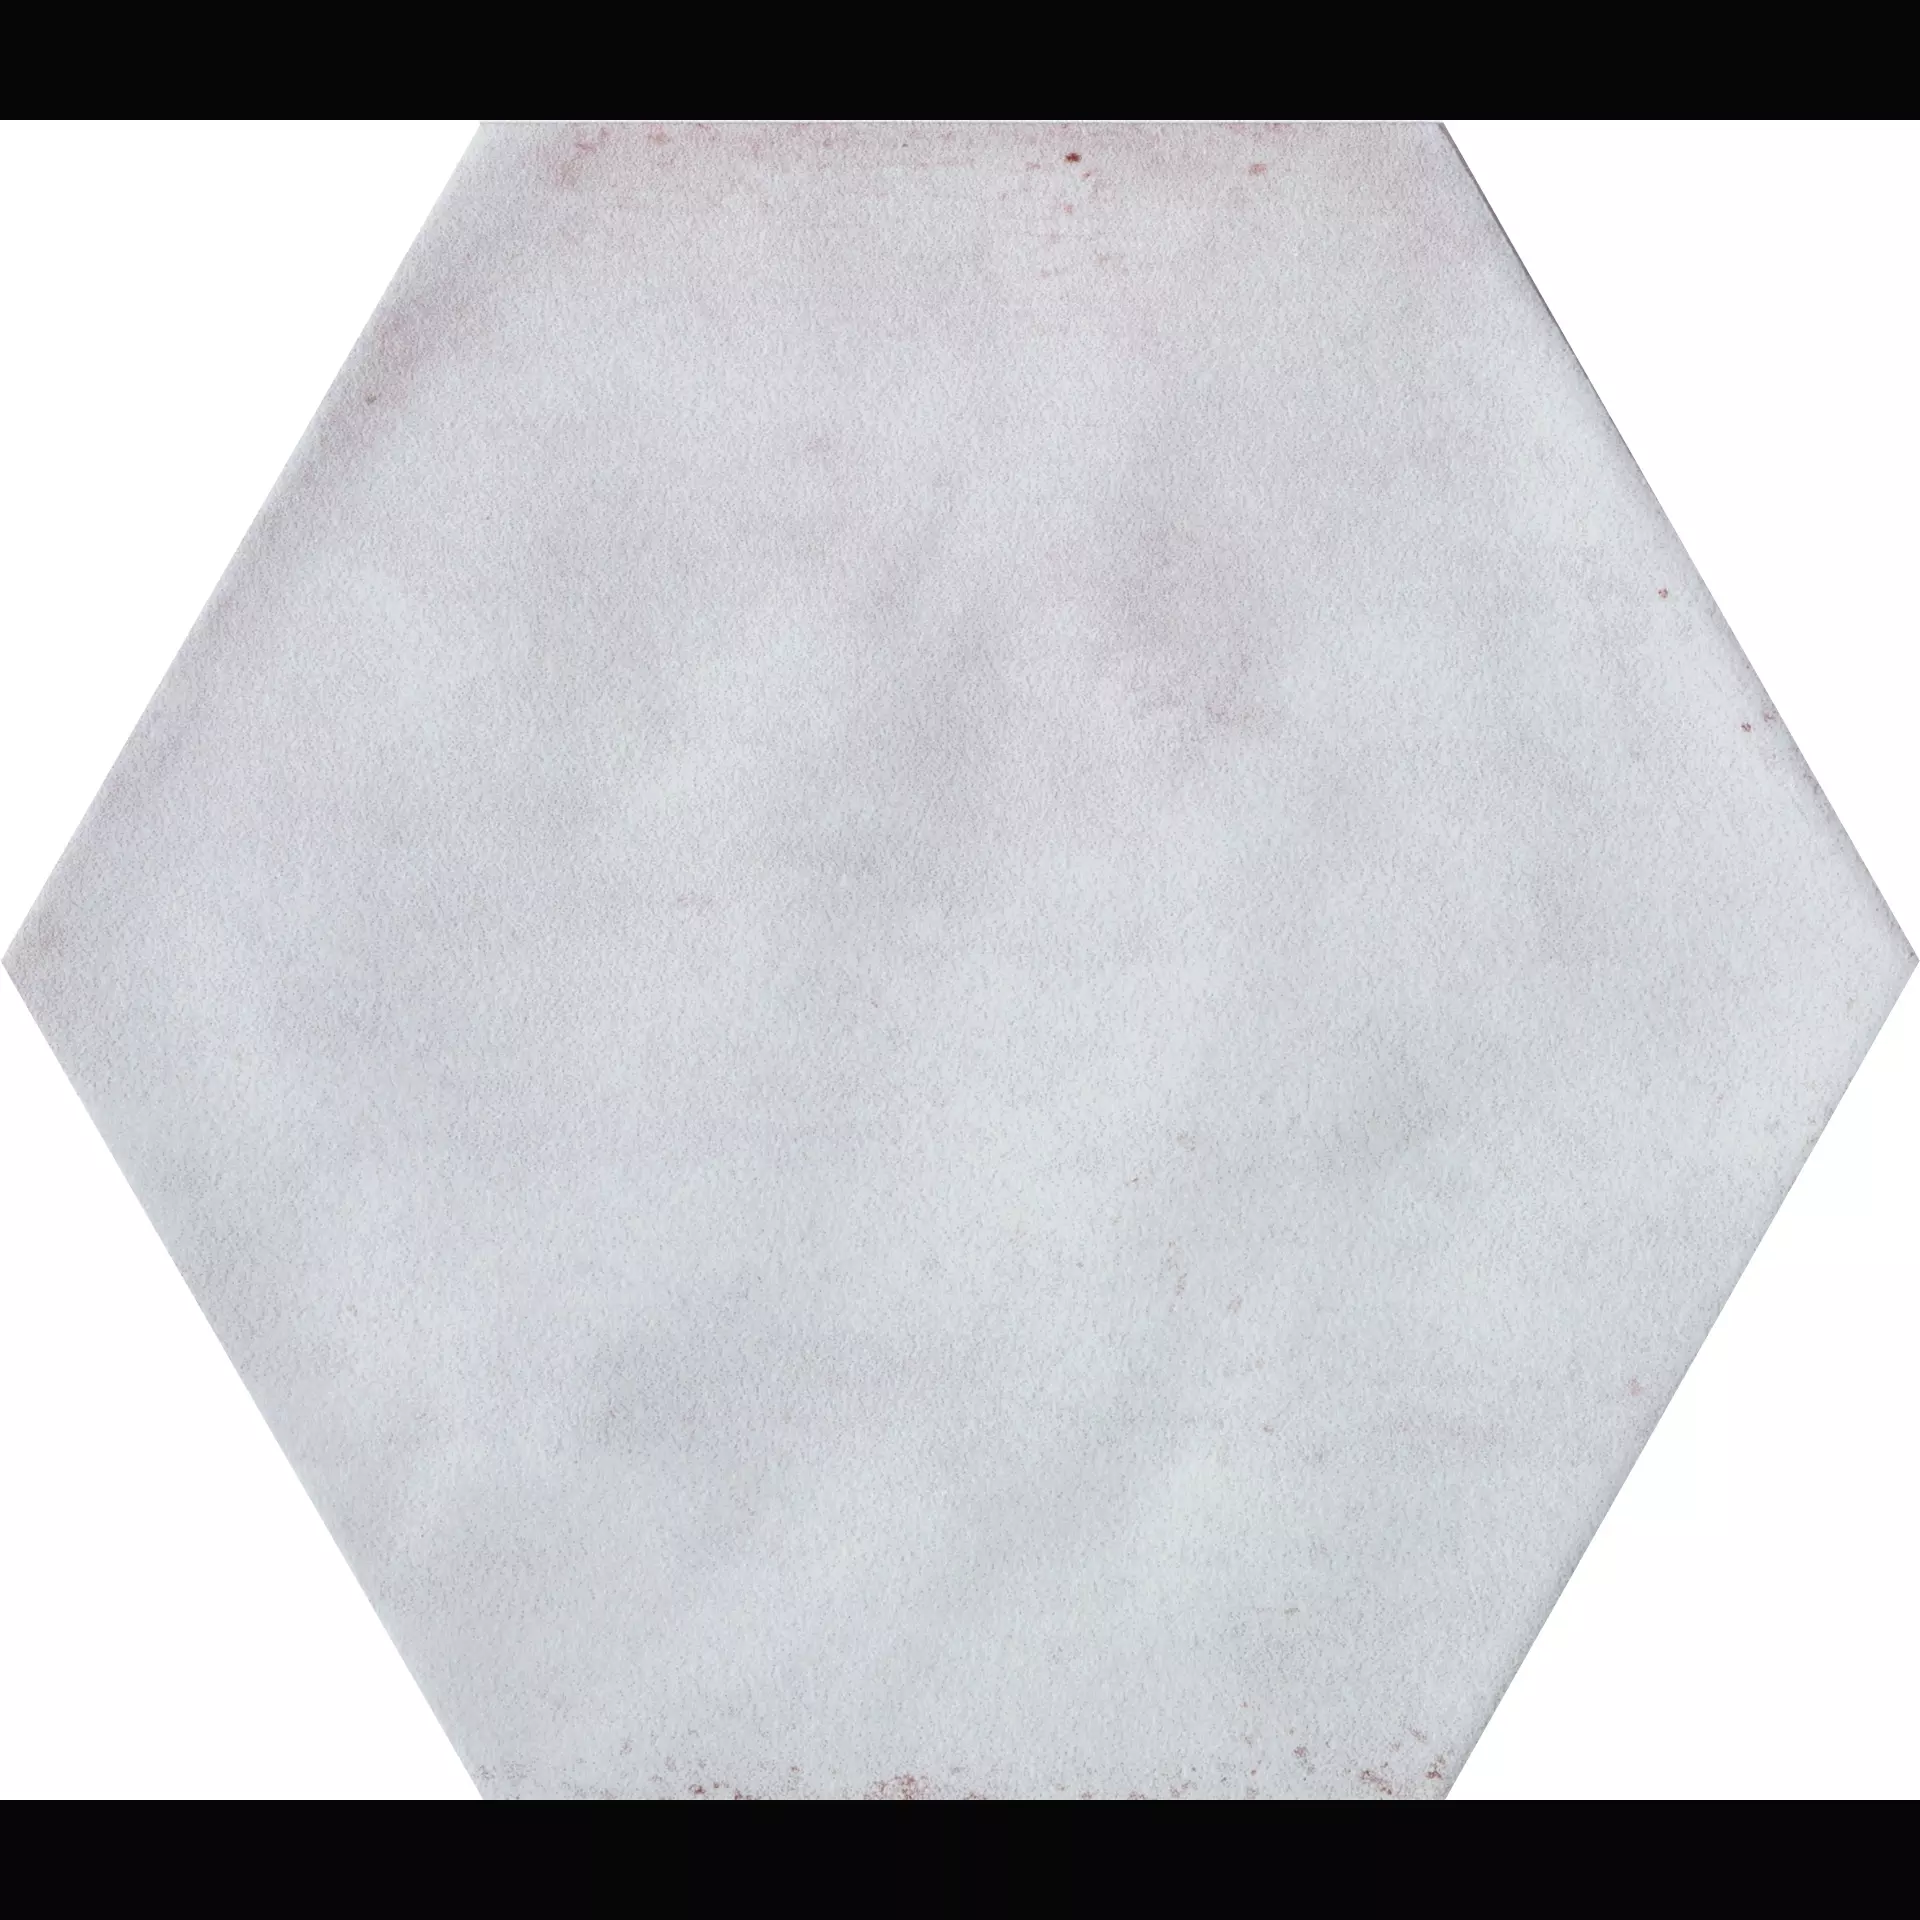 CIR Fuoritono Bianco Opaco Hexagon 1072708 24x27,7cm 10mm